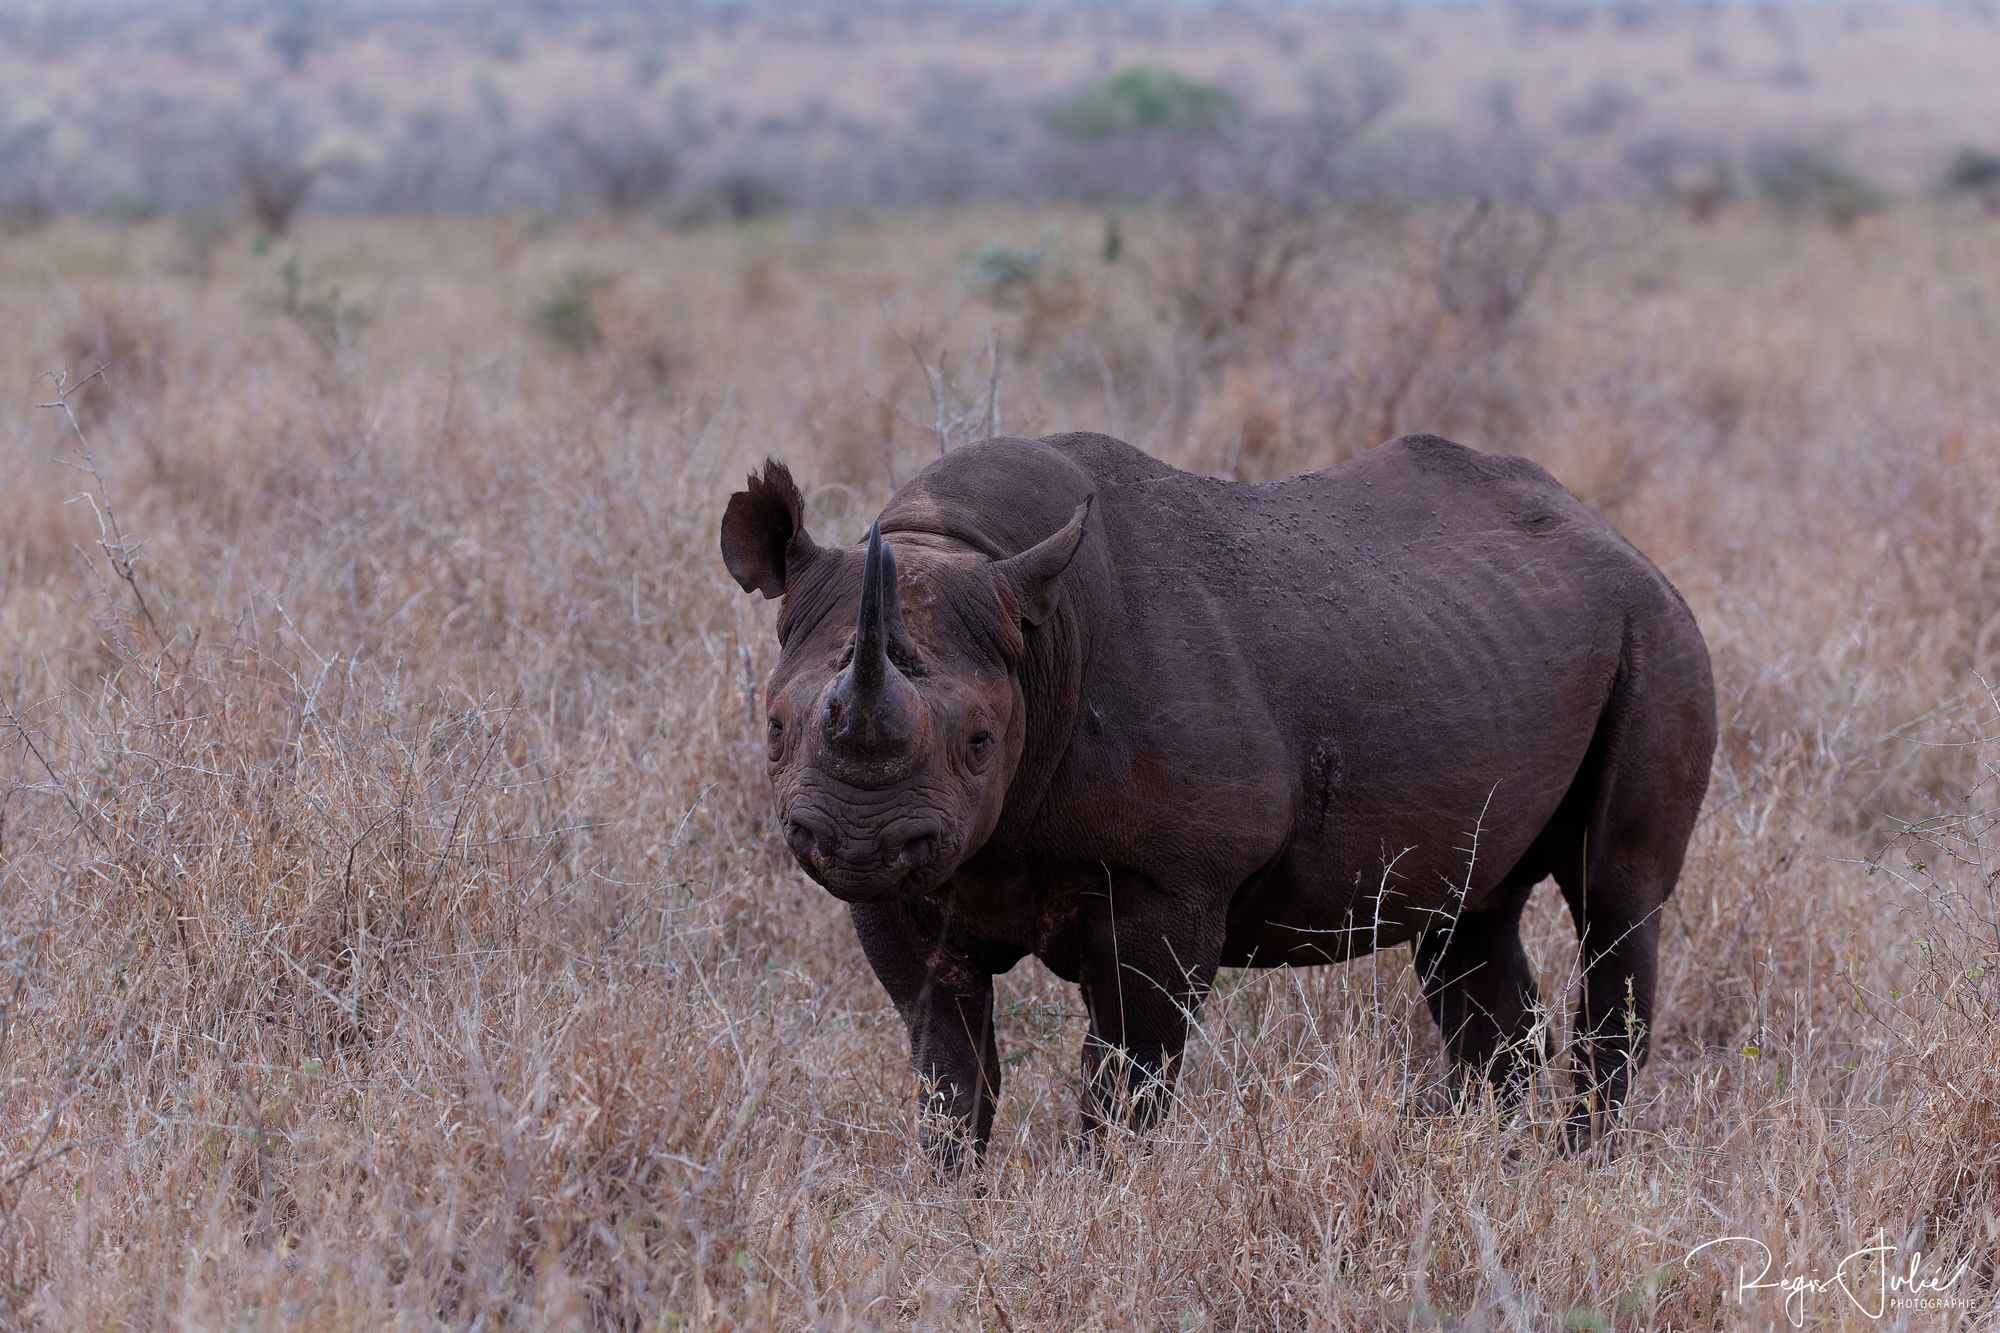 Zimanga : Les safaris